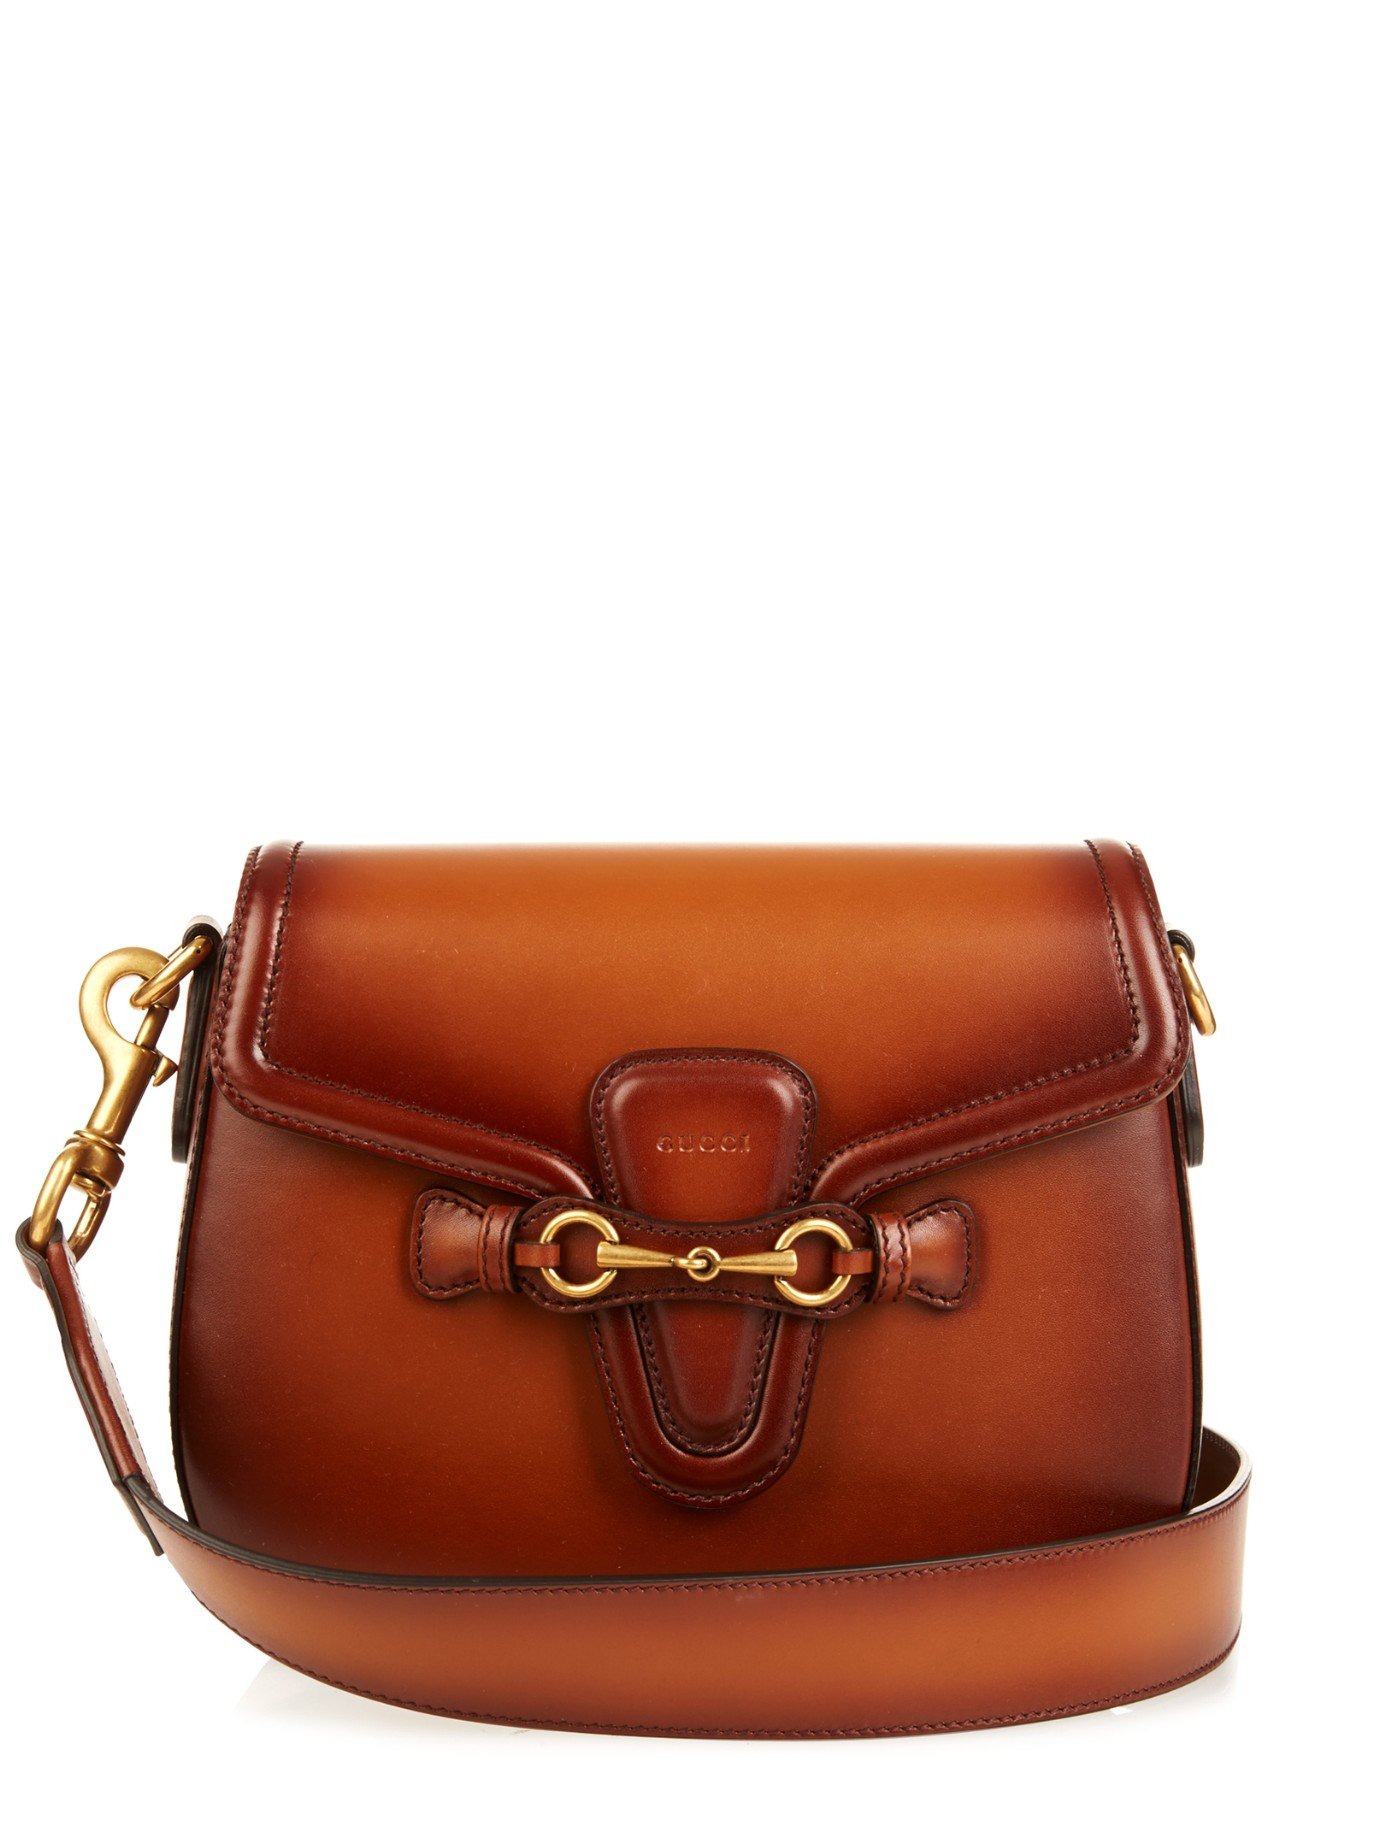 Gucci Lady Web Medium Leather Shoulder Bag in Brown - Lyst